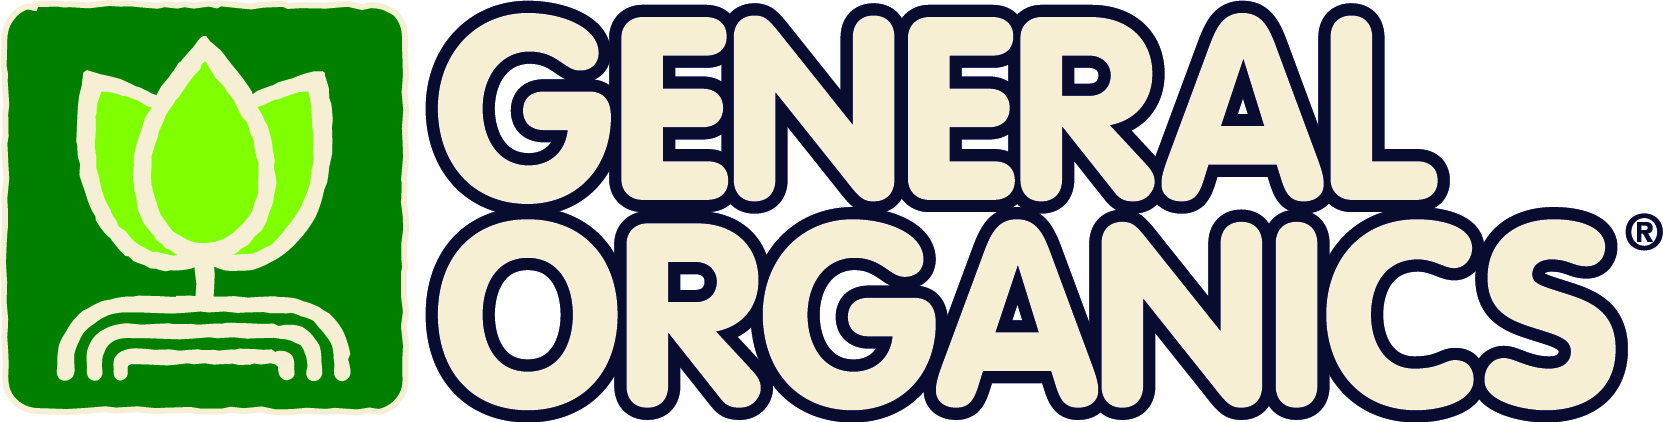 general organics logo